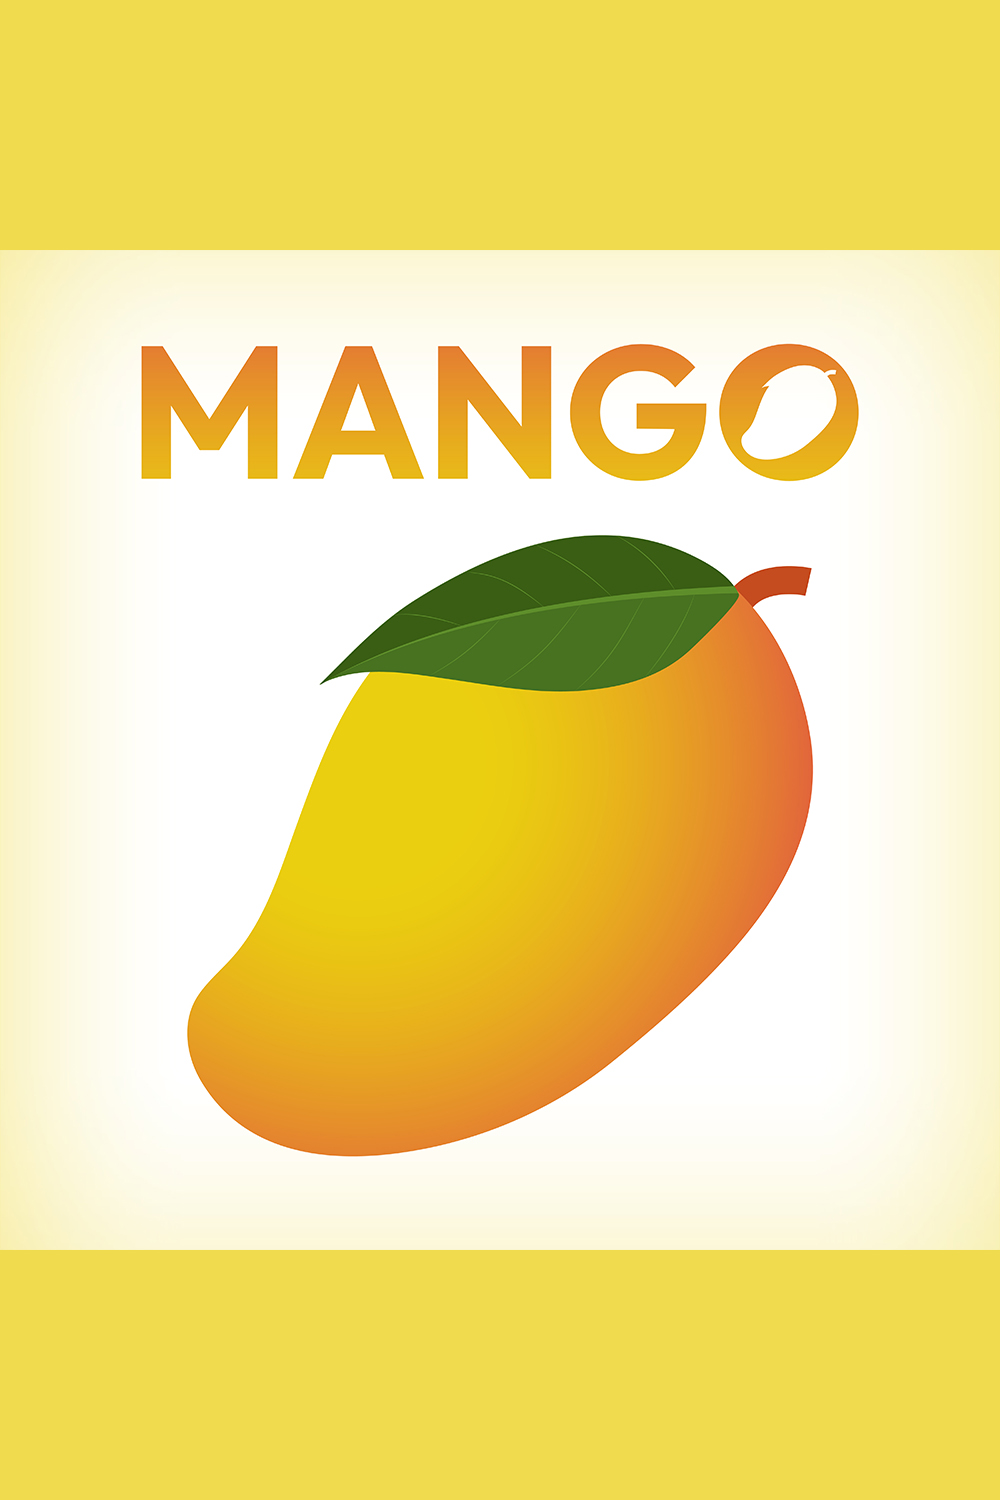 Mango design 3 templates pinterest preview image.